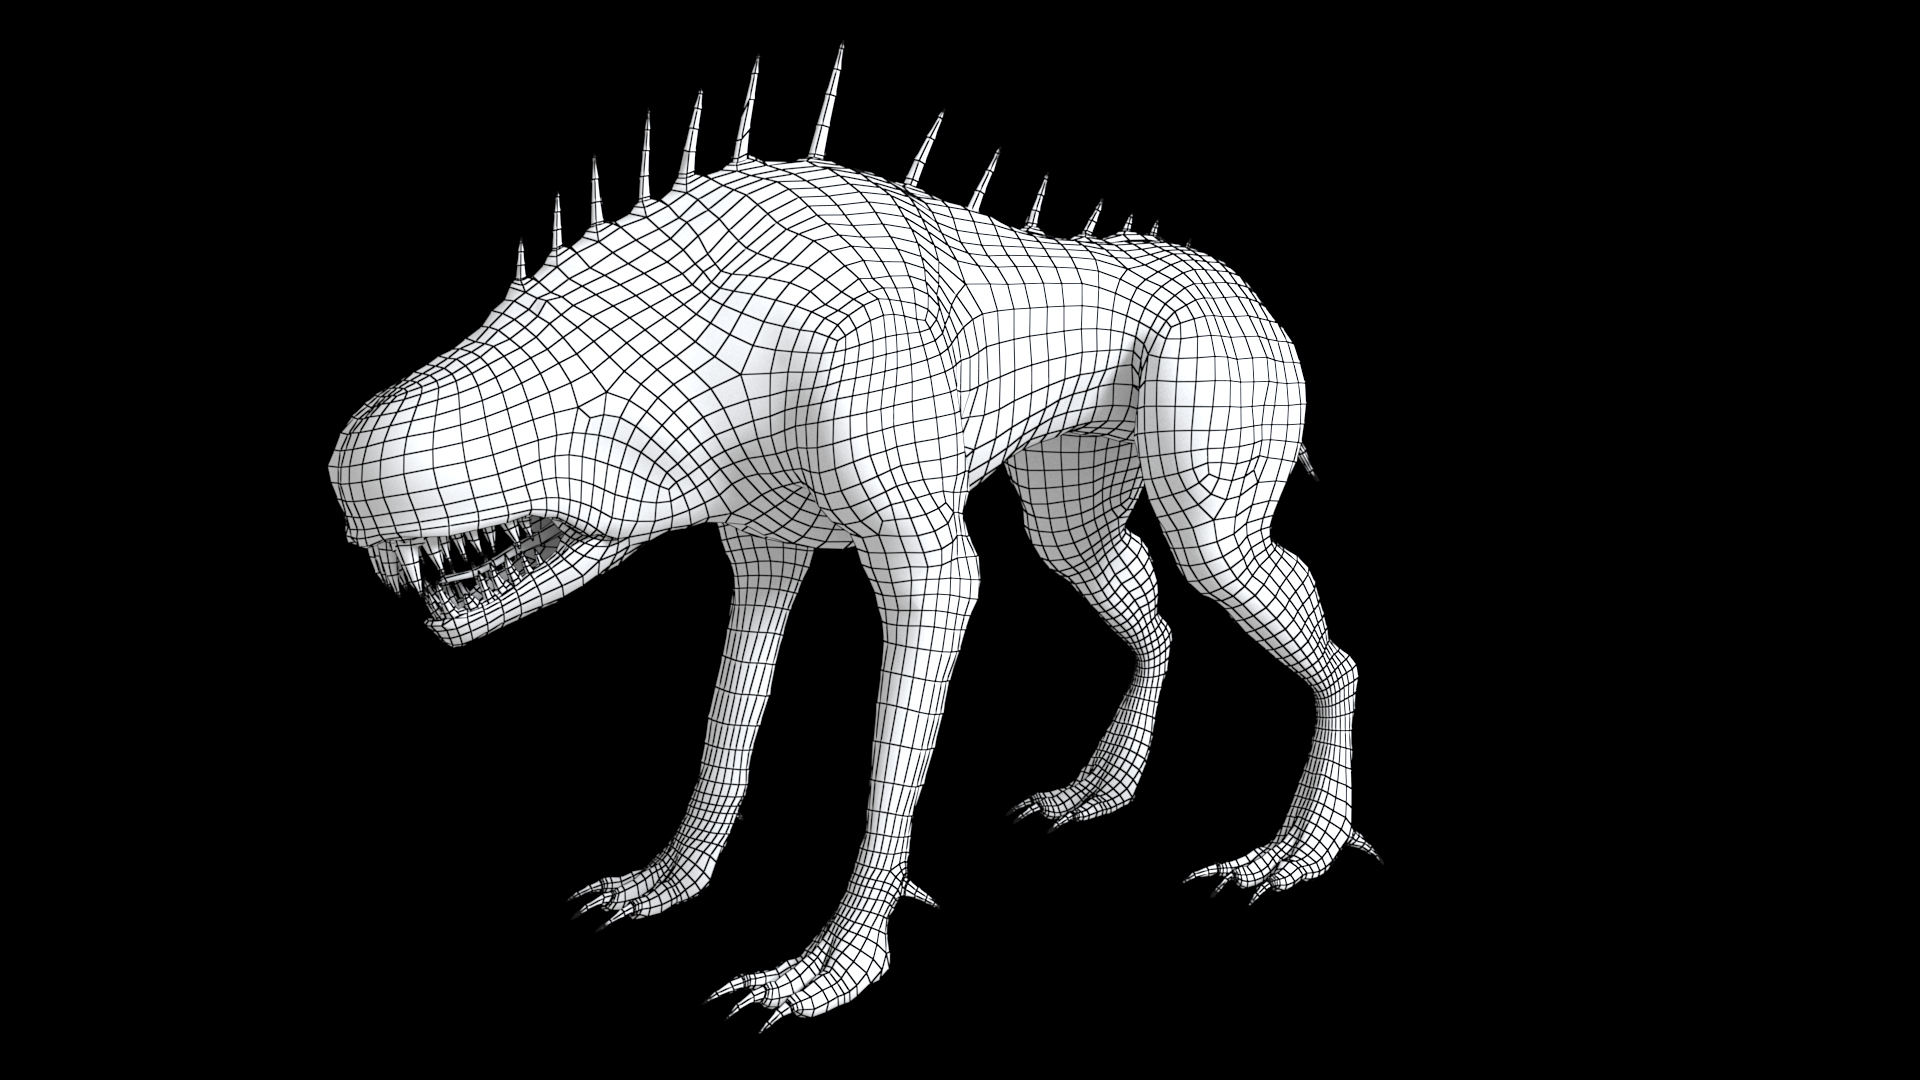 Dog Mutand 3D model - TurboSquid 2087666